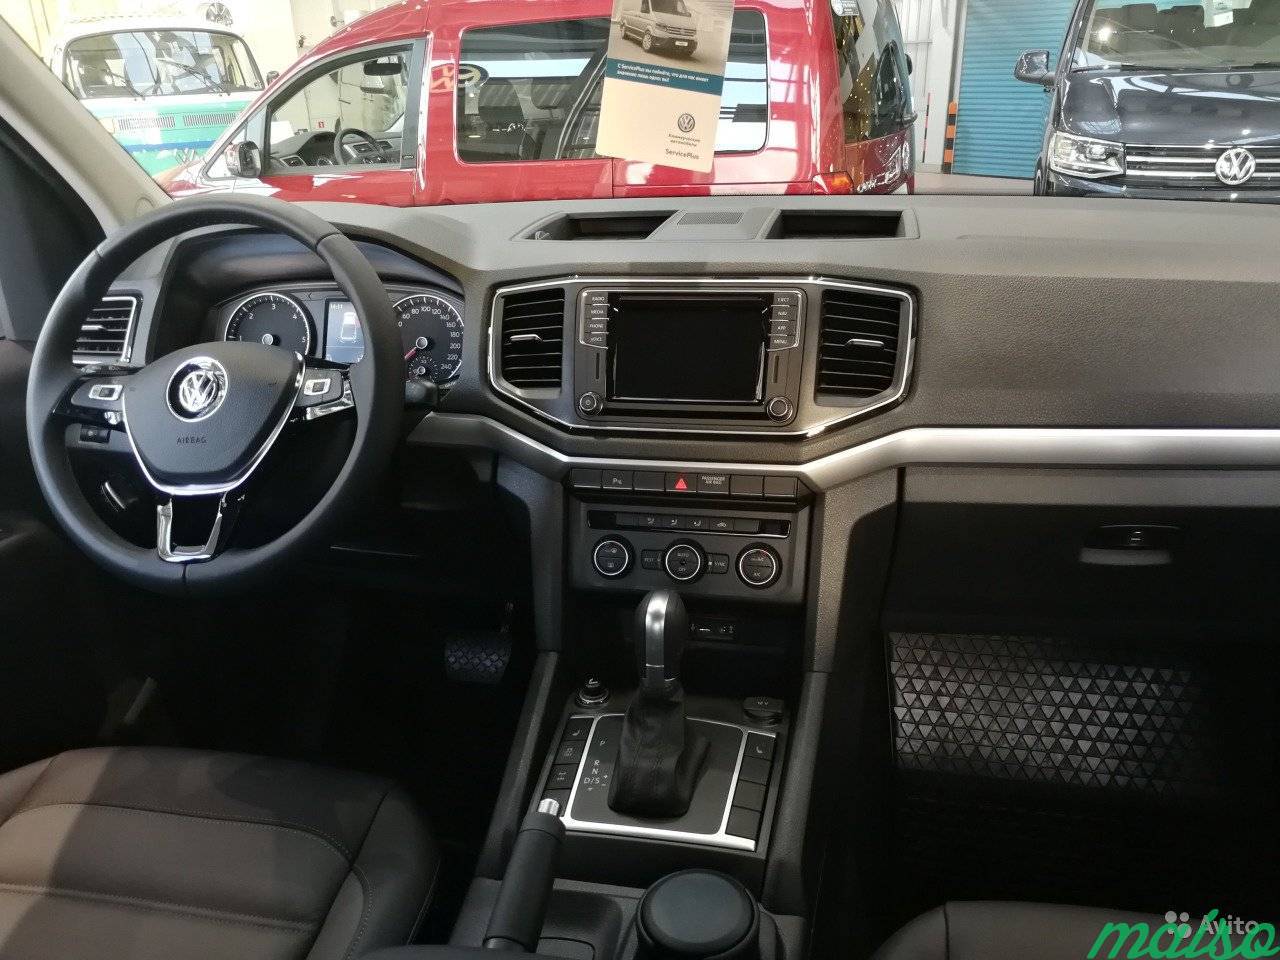 Volkswagen Amarok 3.0 AT, 2018, пикап в Санкт-Петербурге. Фото 6